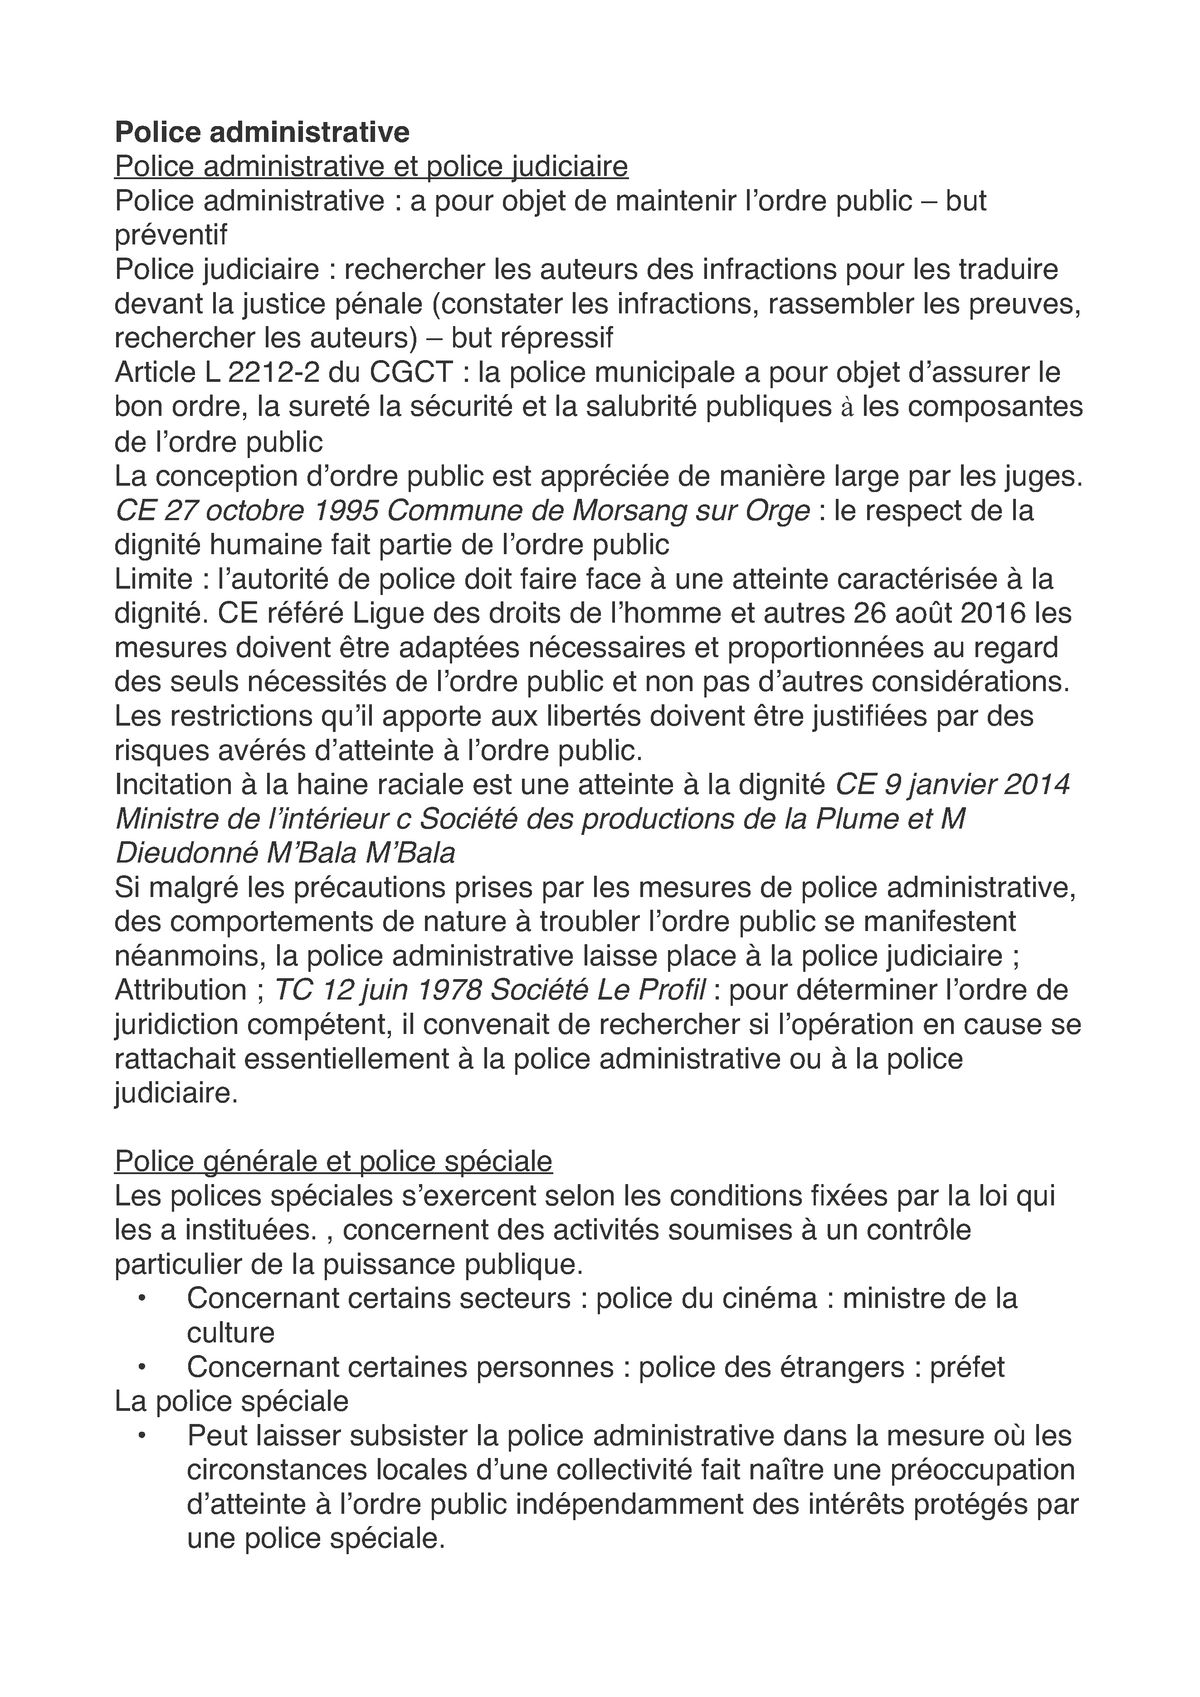 la police administrative dissertation pdf